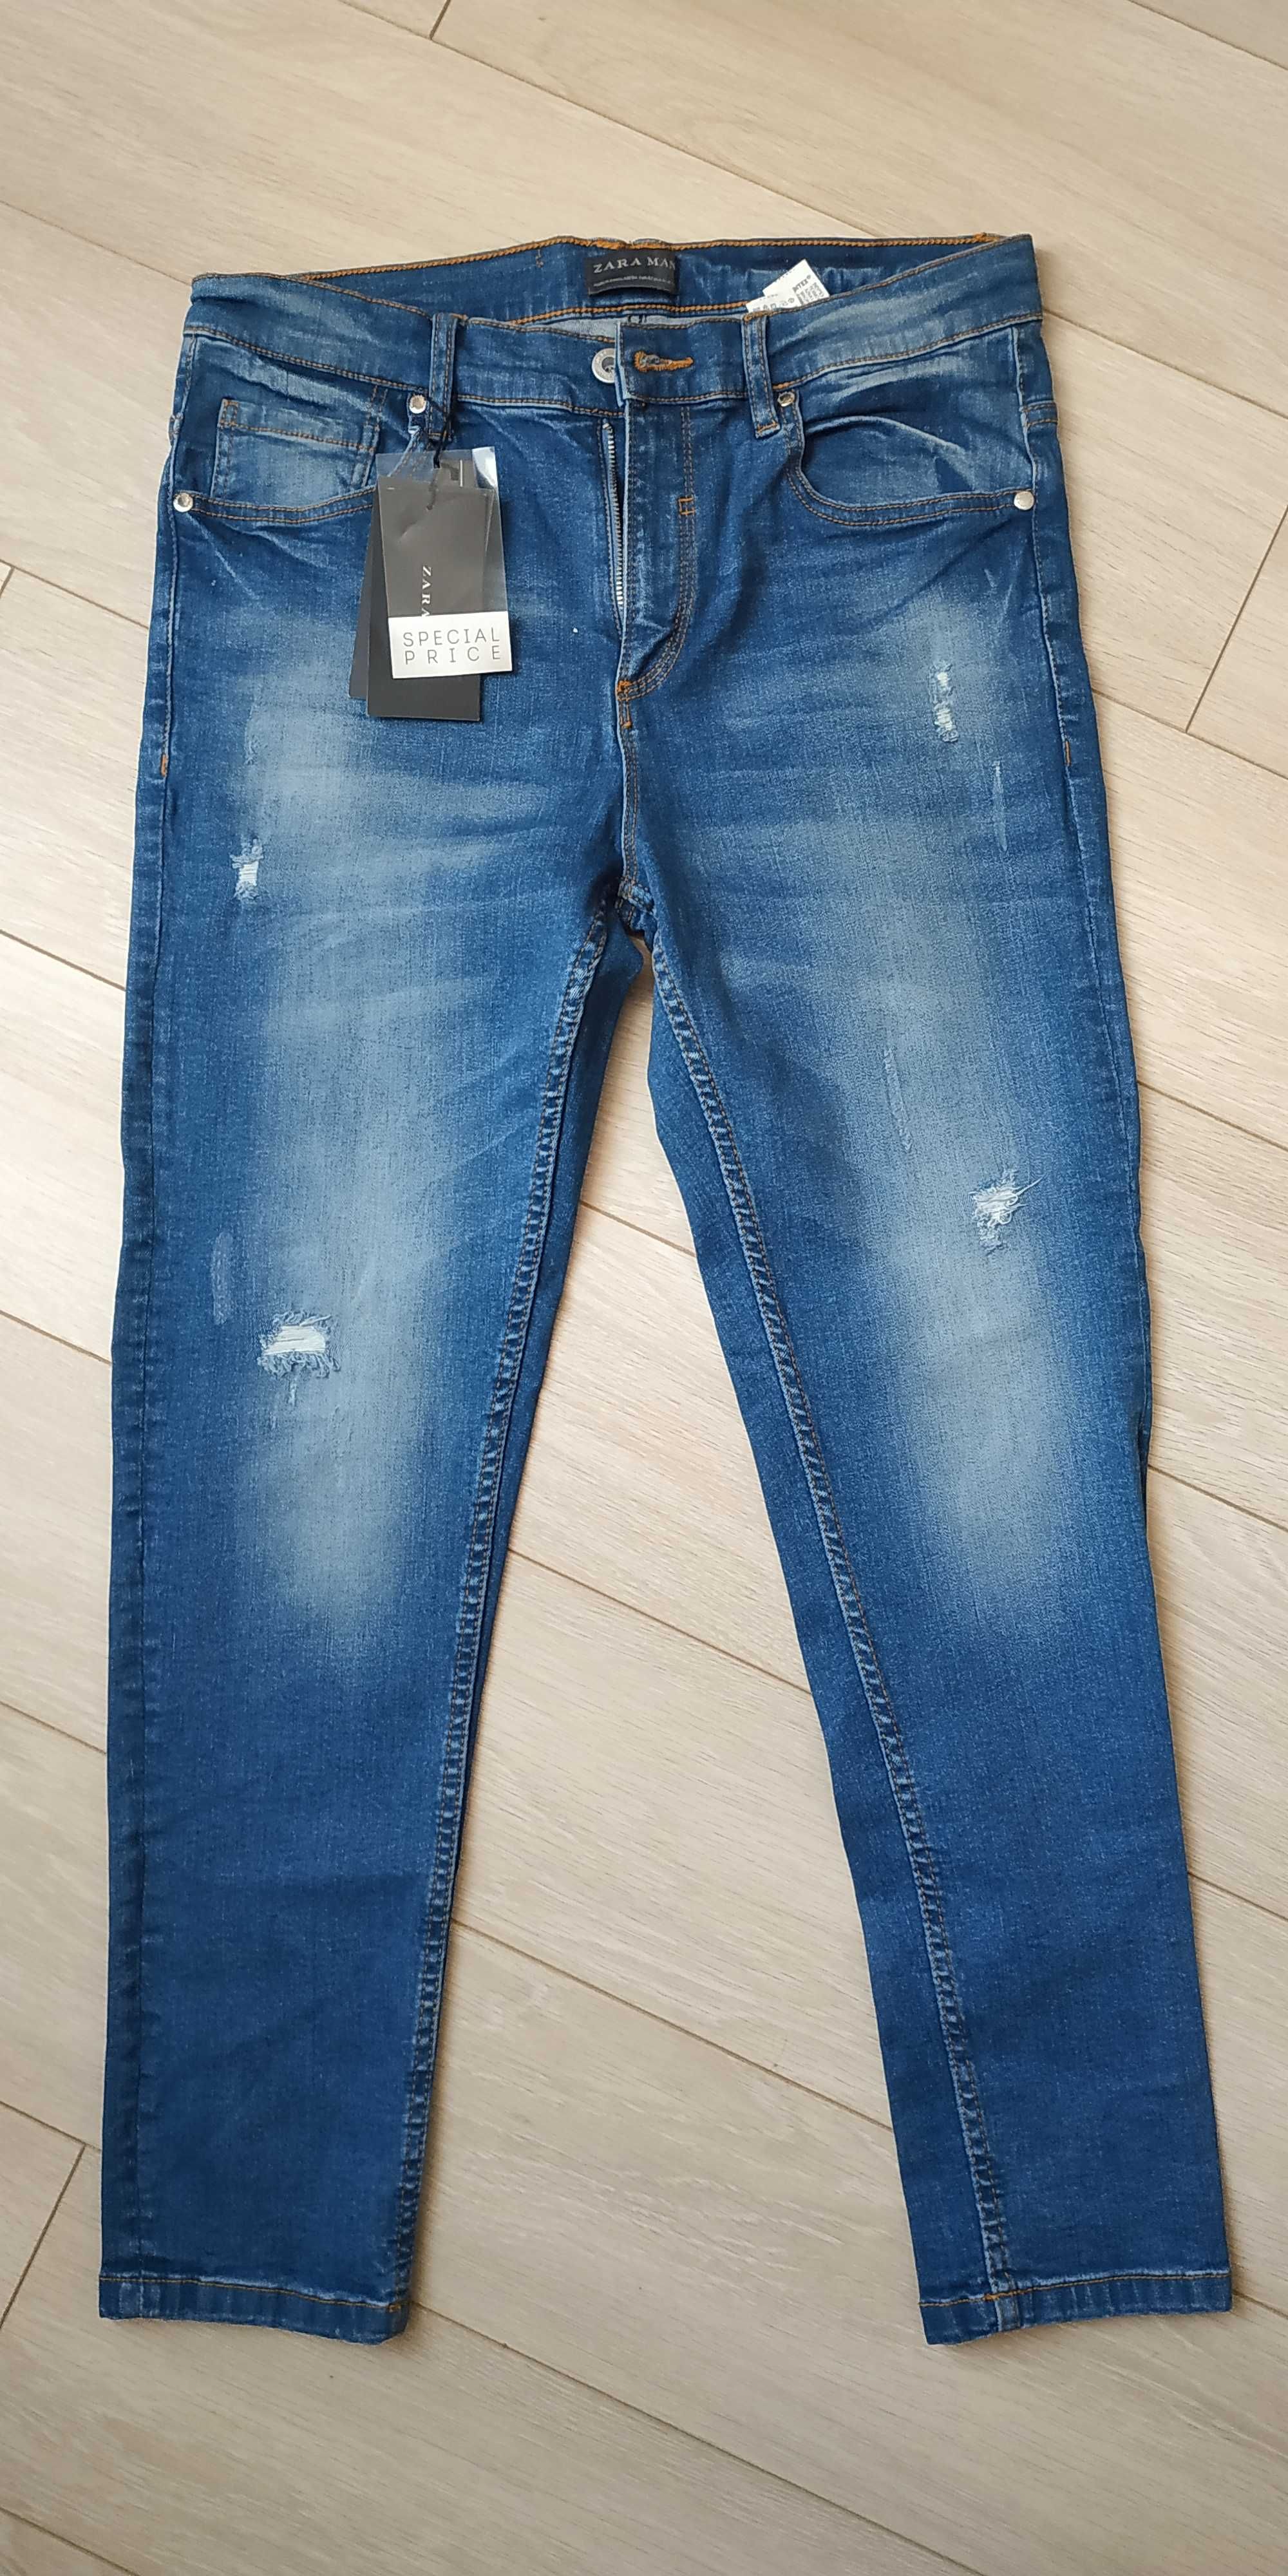 Zara Men Skinny, джинсы мужские,
42 размер